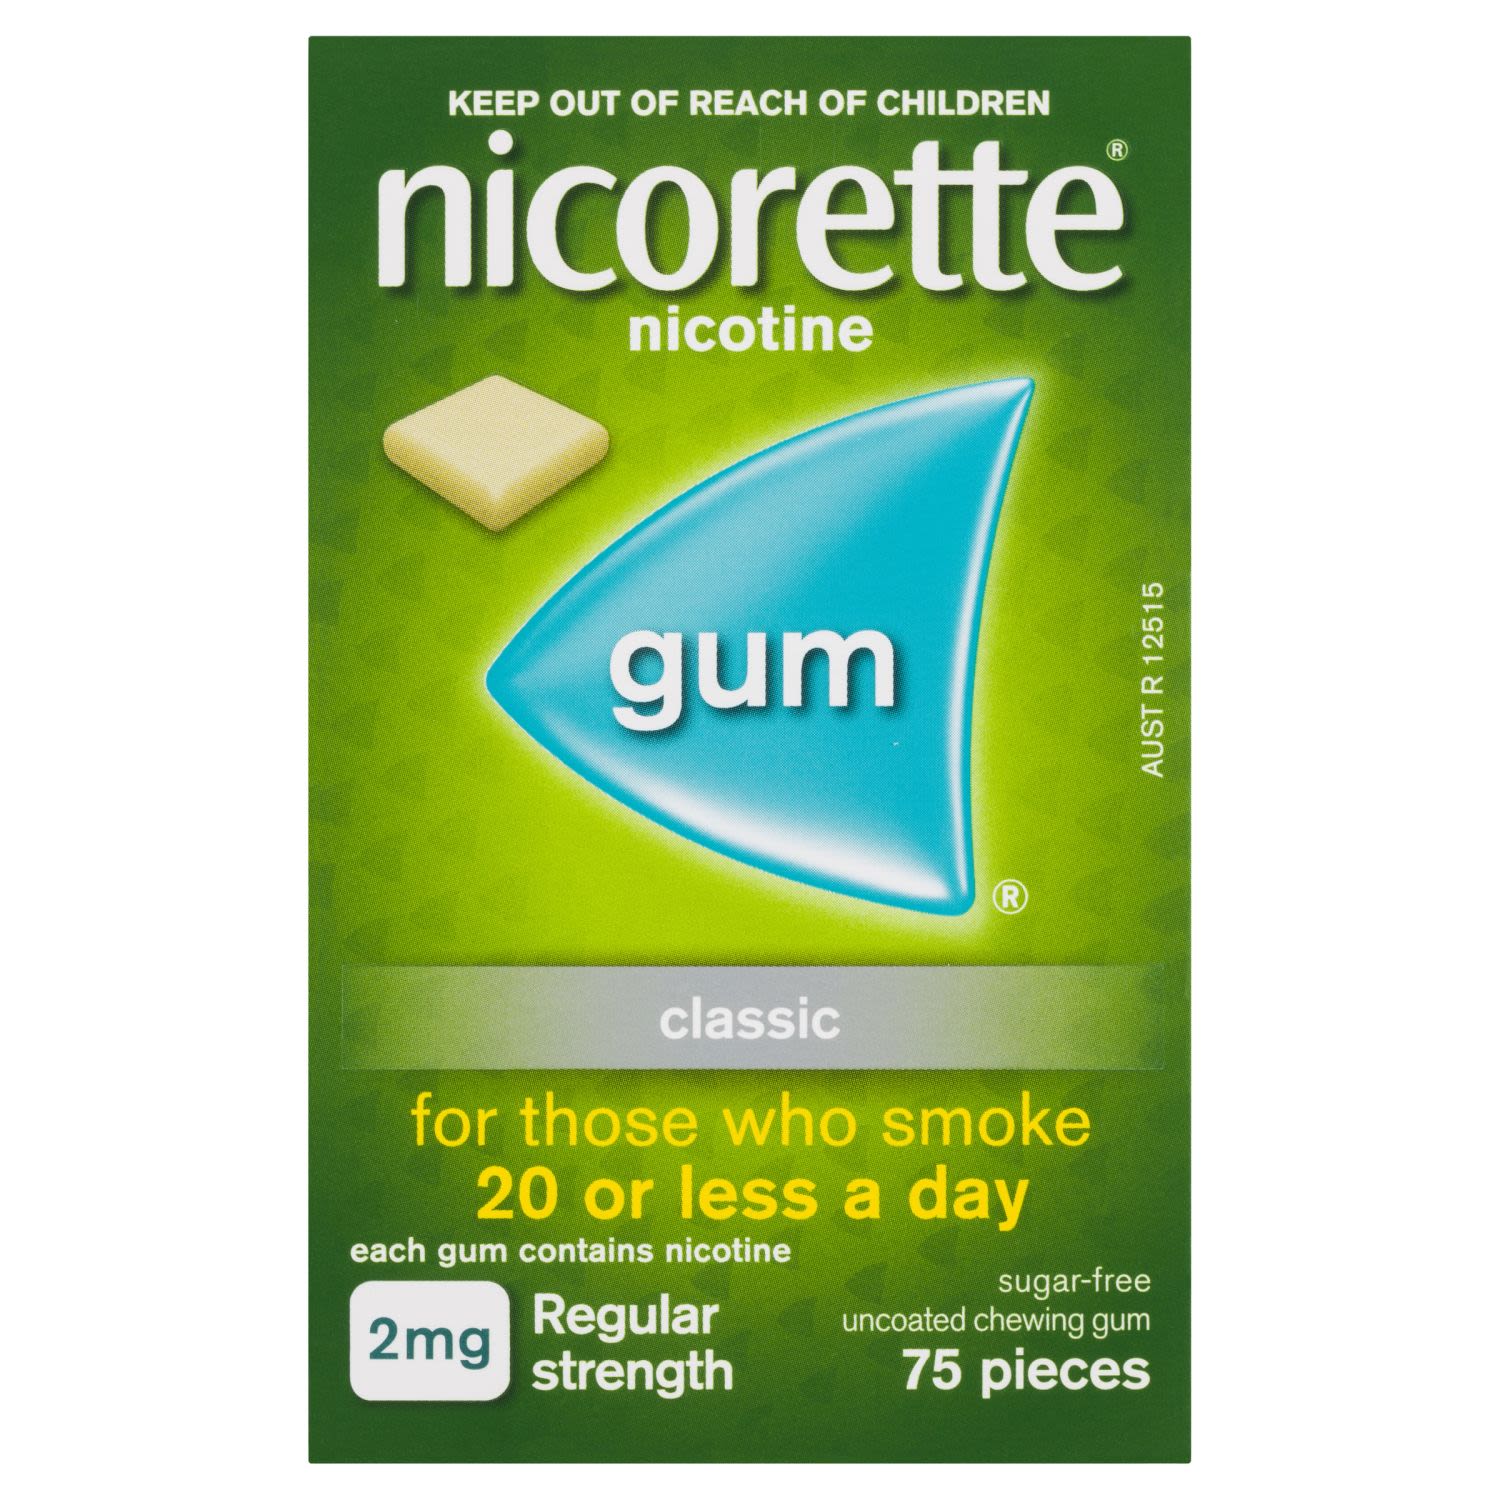 Nicorette Quit Smoking Nicotine Gum Classic 2mg Regular Strength, 75 Each